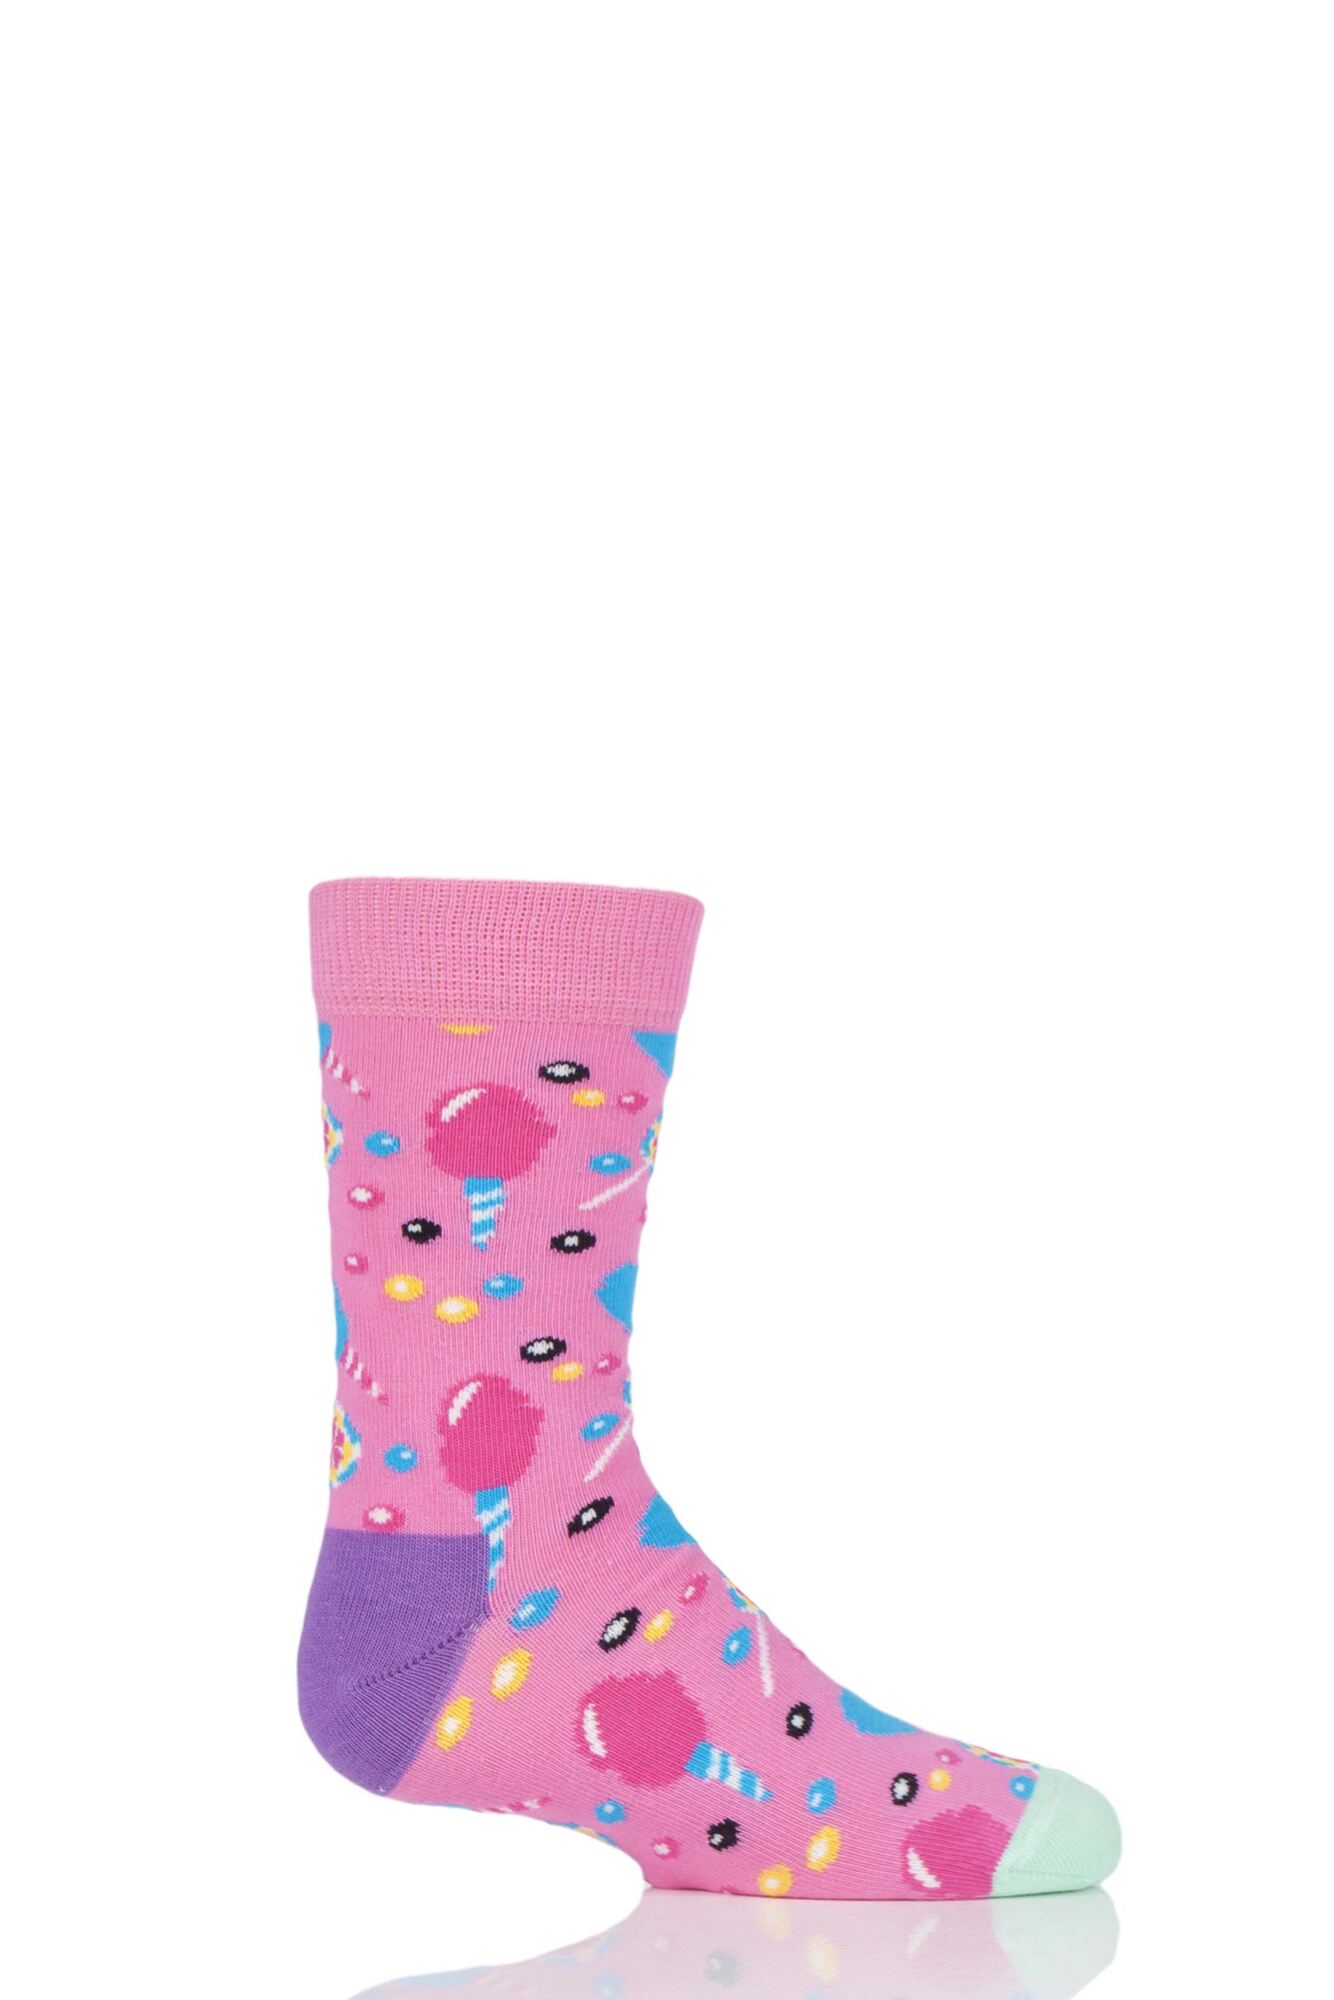 1 Pair Cotton Candy Cotton Socks Kids Unisex - Happy Socks